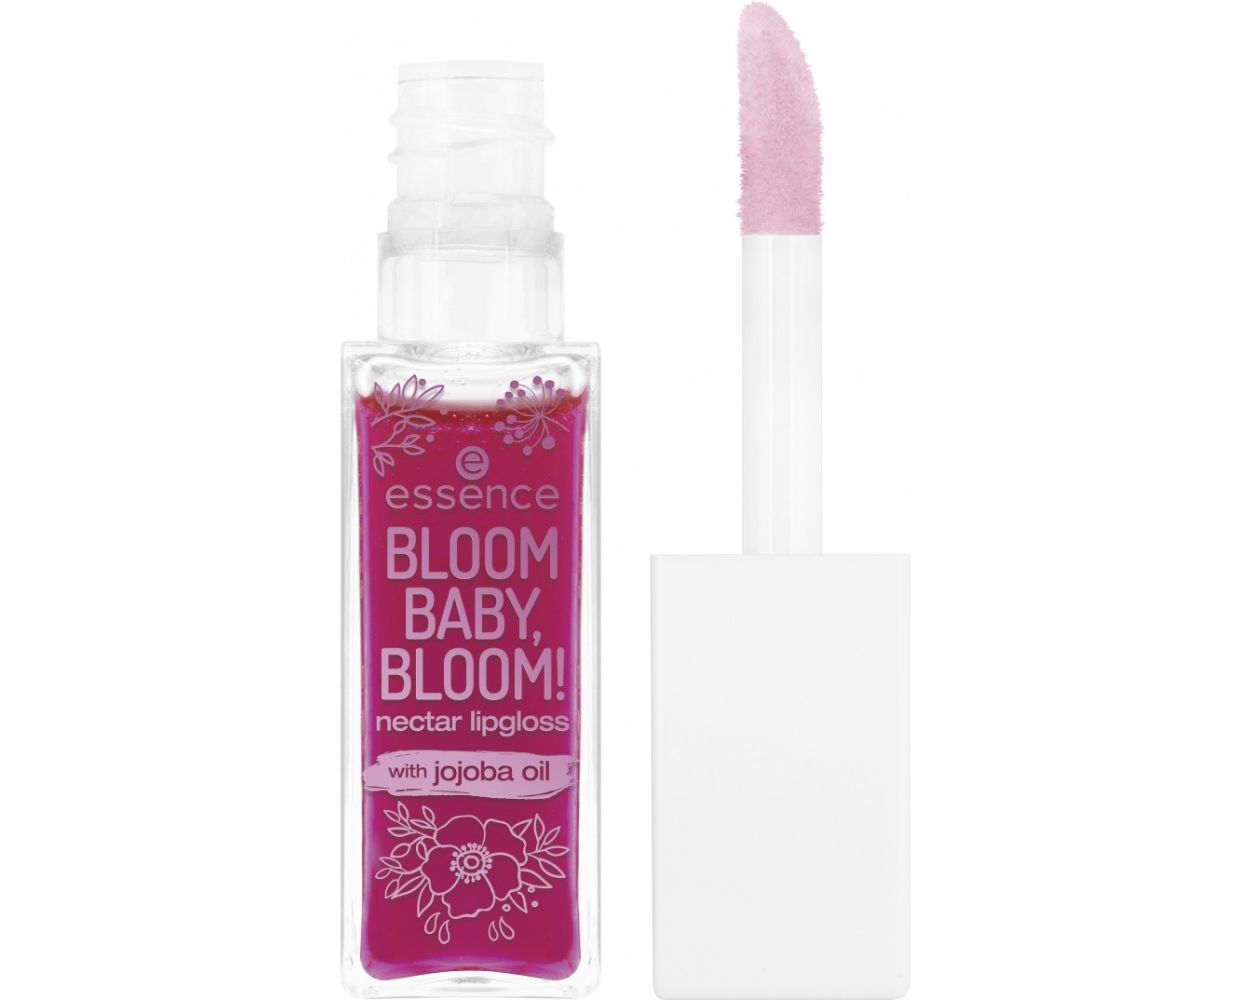 Essence Bloom Baby Bloom nectar lipgloss 01 Hibis Kiss - AllurebeautypkEssence Bloom Baby Bloom nectar lipgloss 01 Hibis Kiss